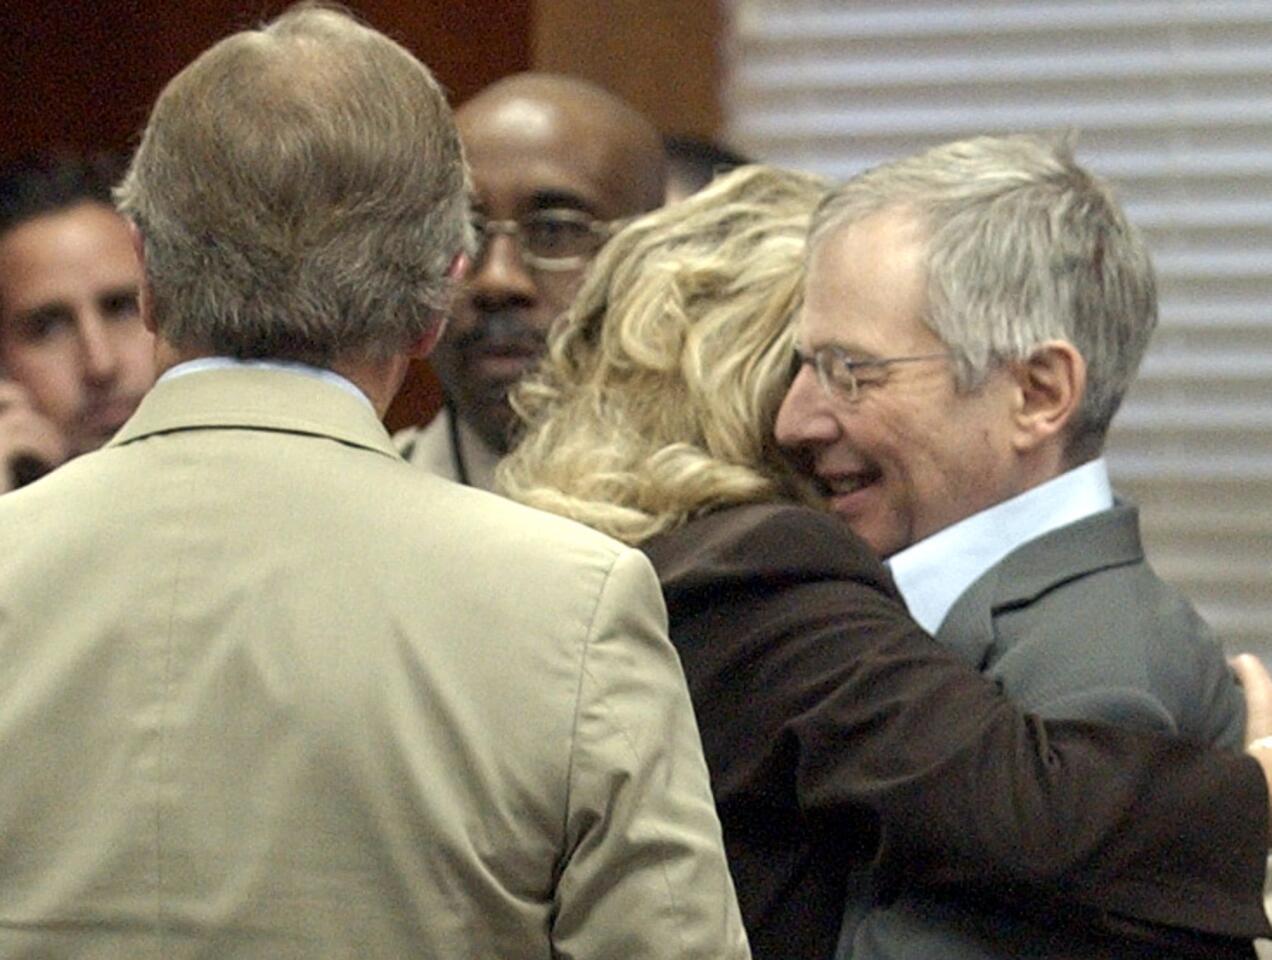 Multi-millionaire murder defendant Robert Durst, right, hugs defense team member Pat Benken after a not guilty verdict Tuesday, Nov. 11, 2003, in Galveston, Texas.